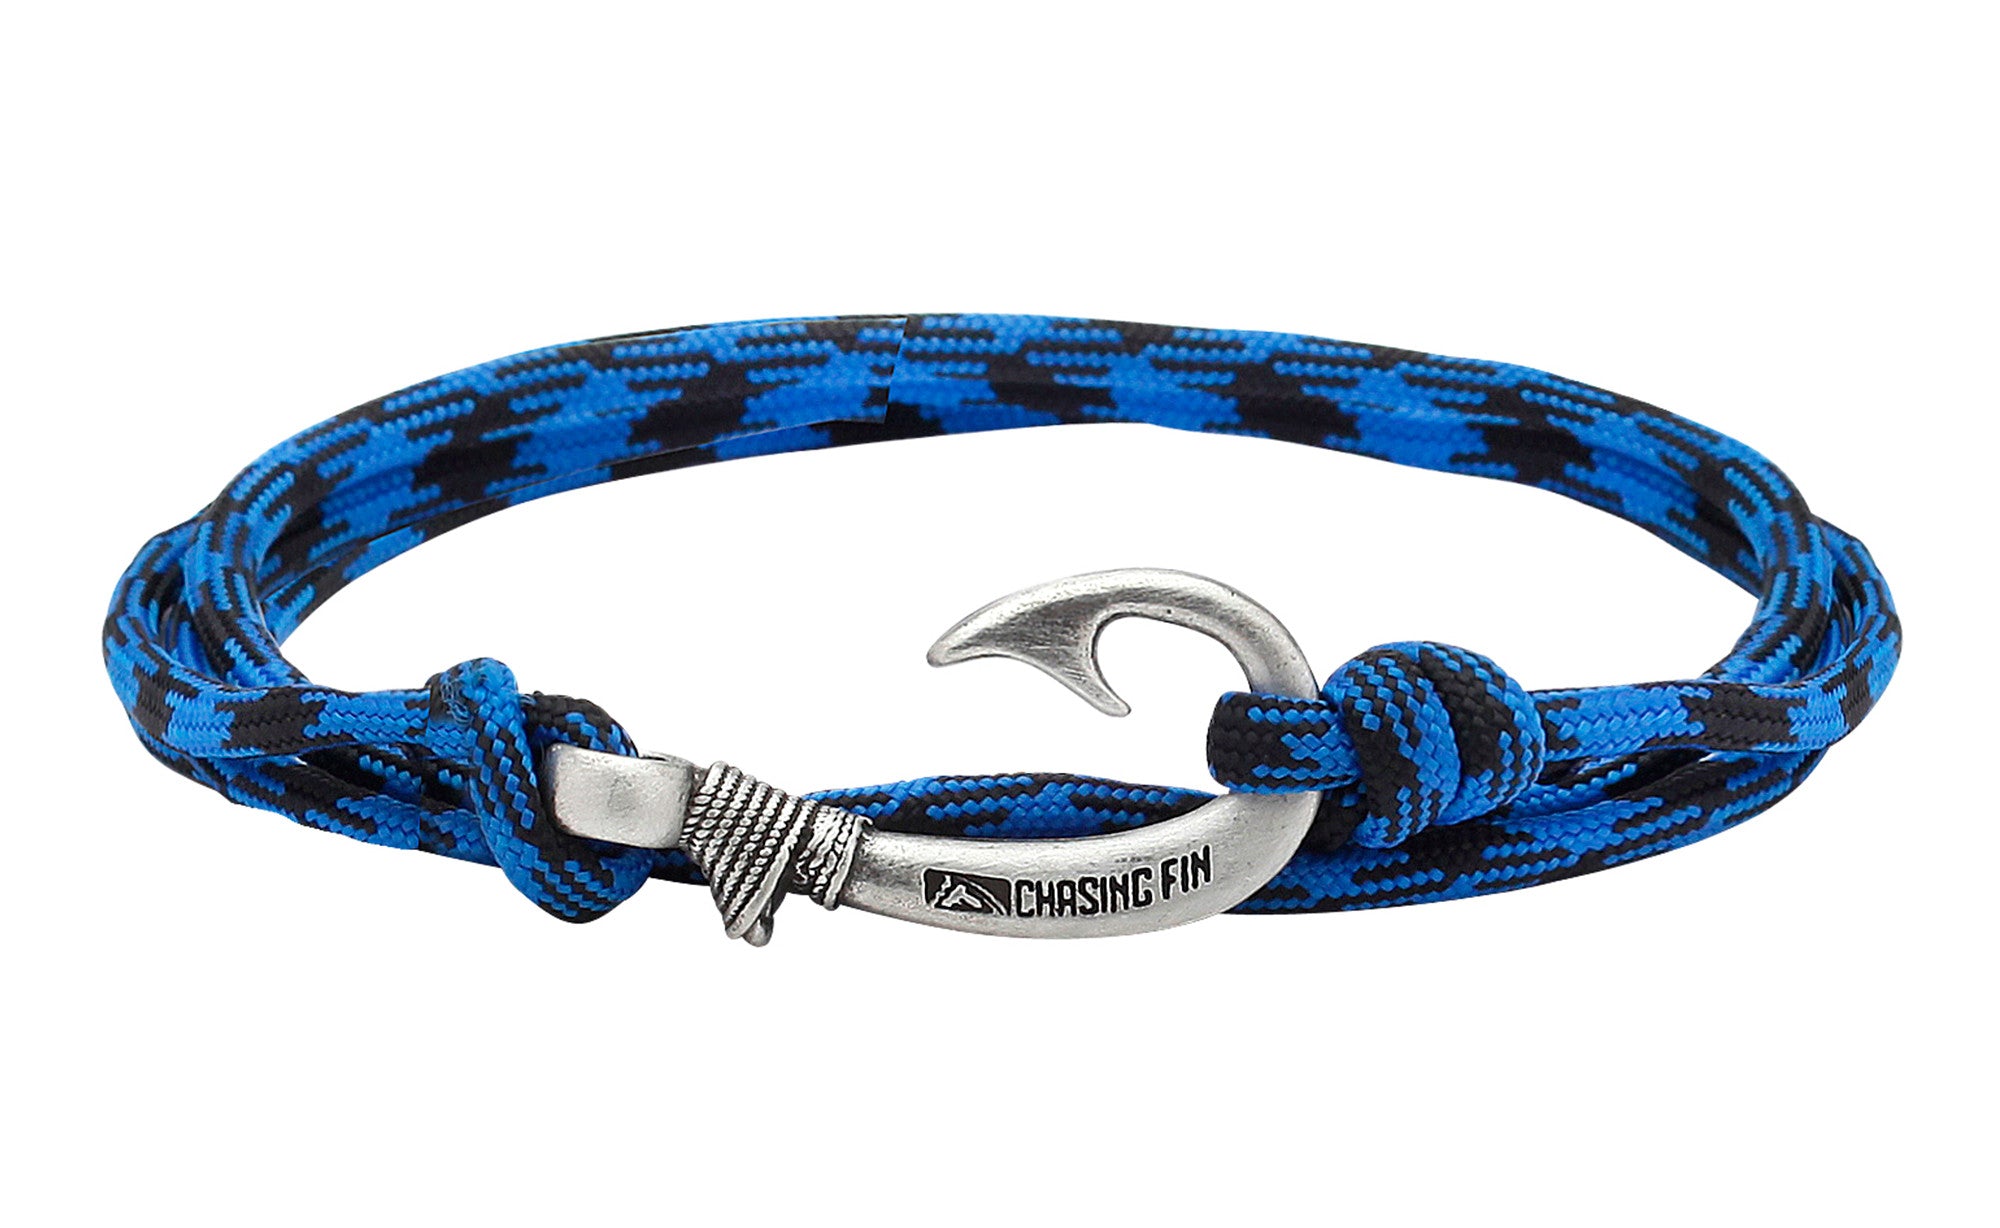 Fish-hook bracelet